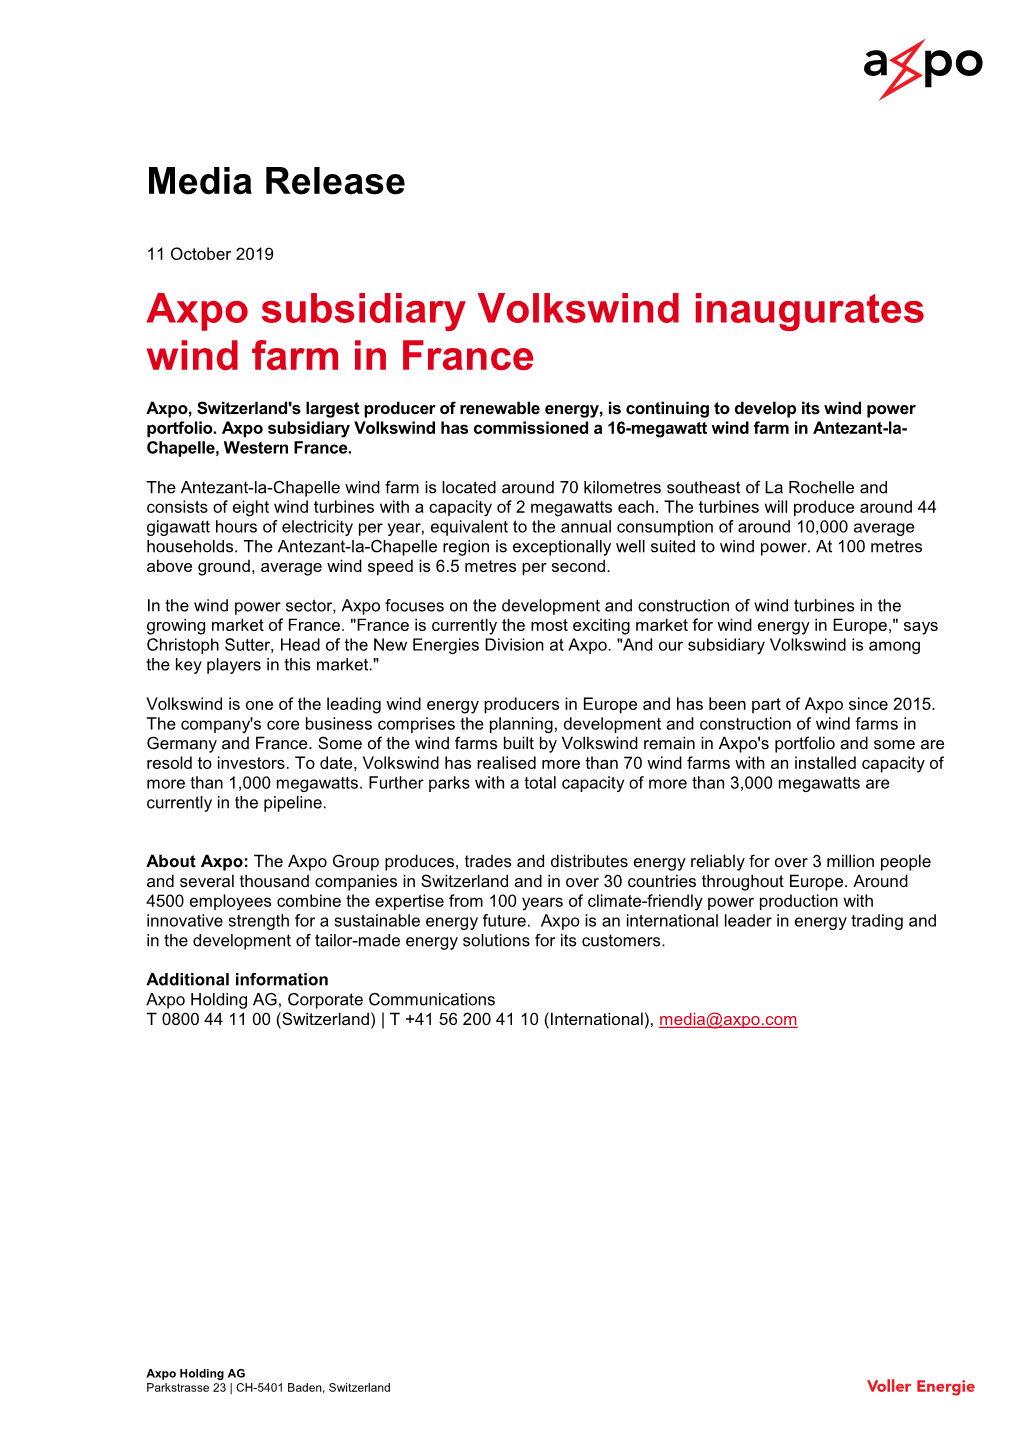 Axpo Subsidiary Volkswind Inaugurates Wind Farm in France